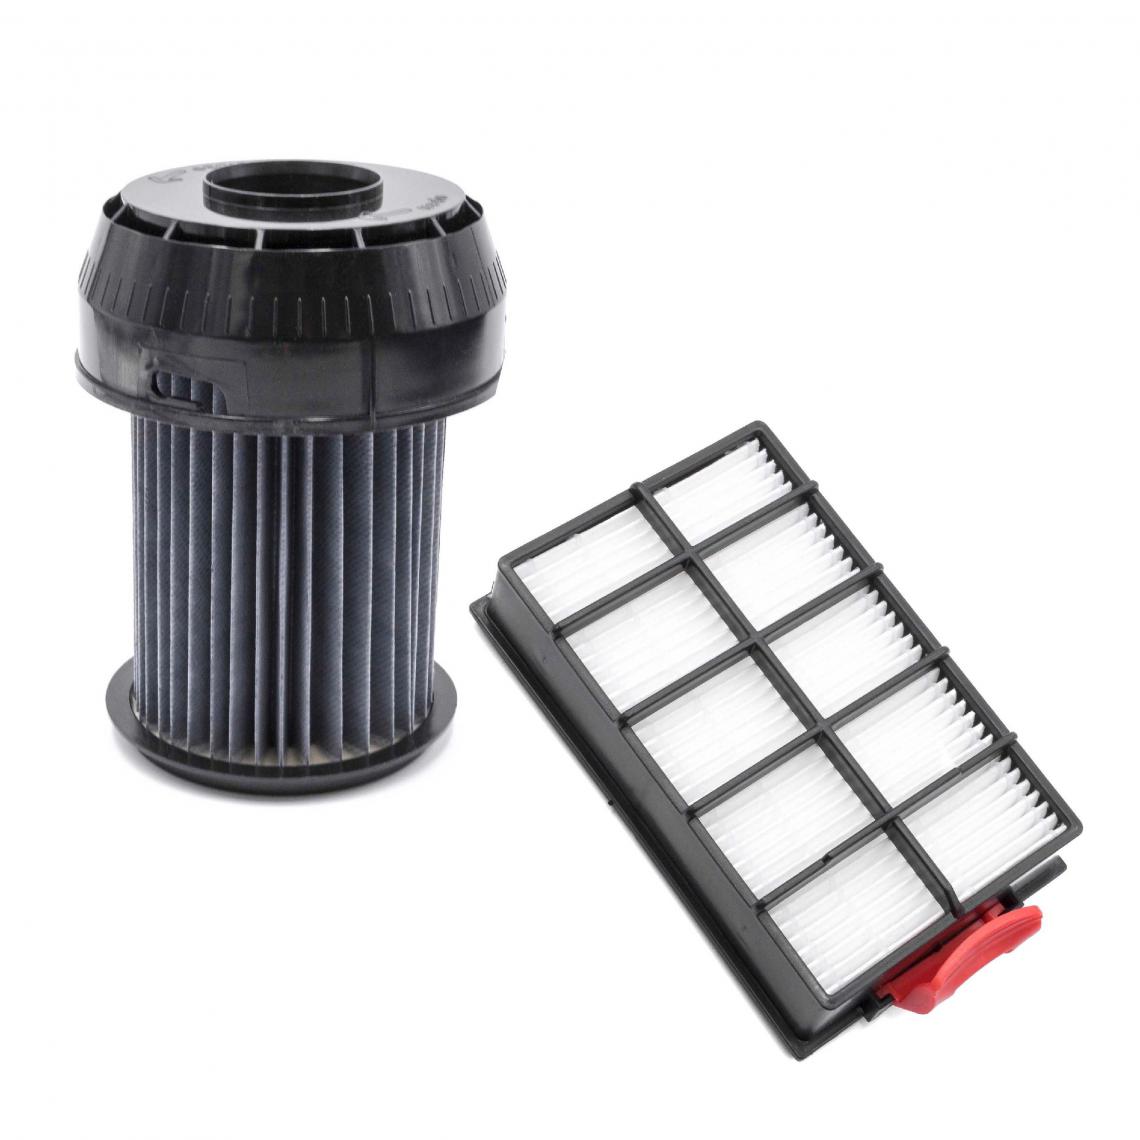 Vhbw - vhbw Lot de filtres compatible avec Bosch BGS 6253102 aspirateur - 2x Filtres de rechange - Accessoire entretien des sols